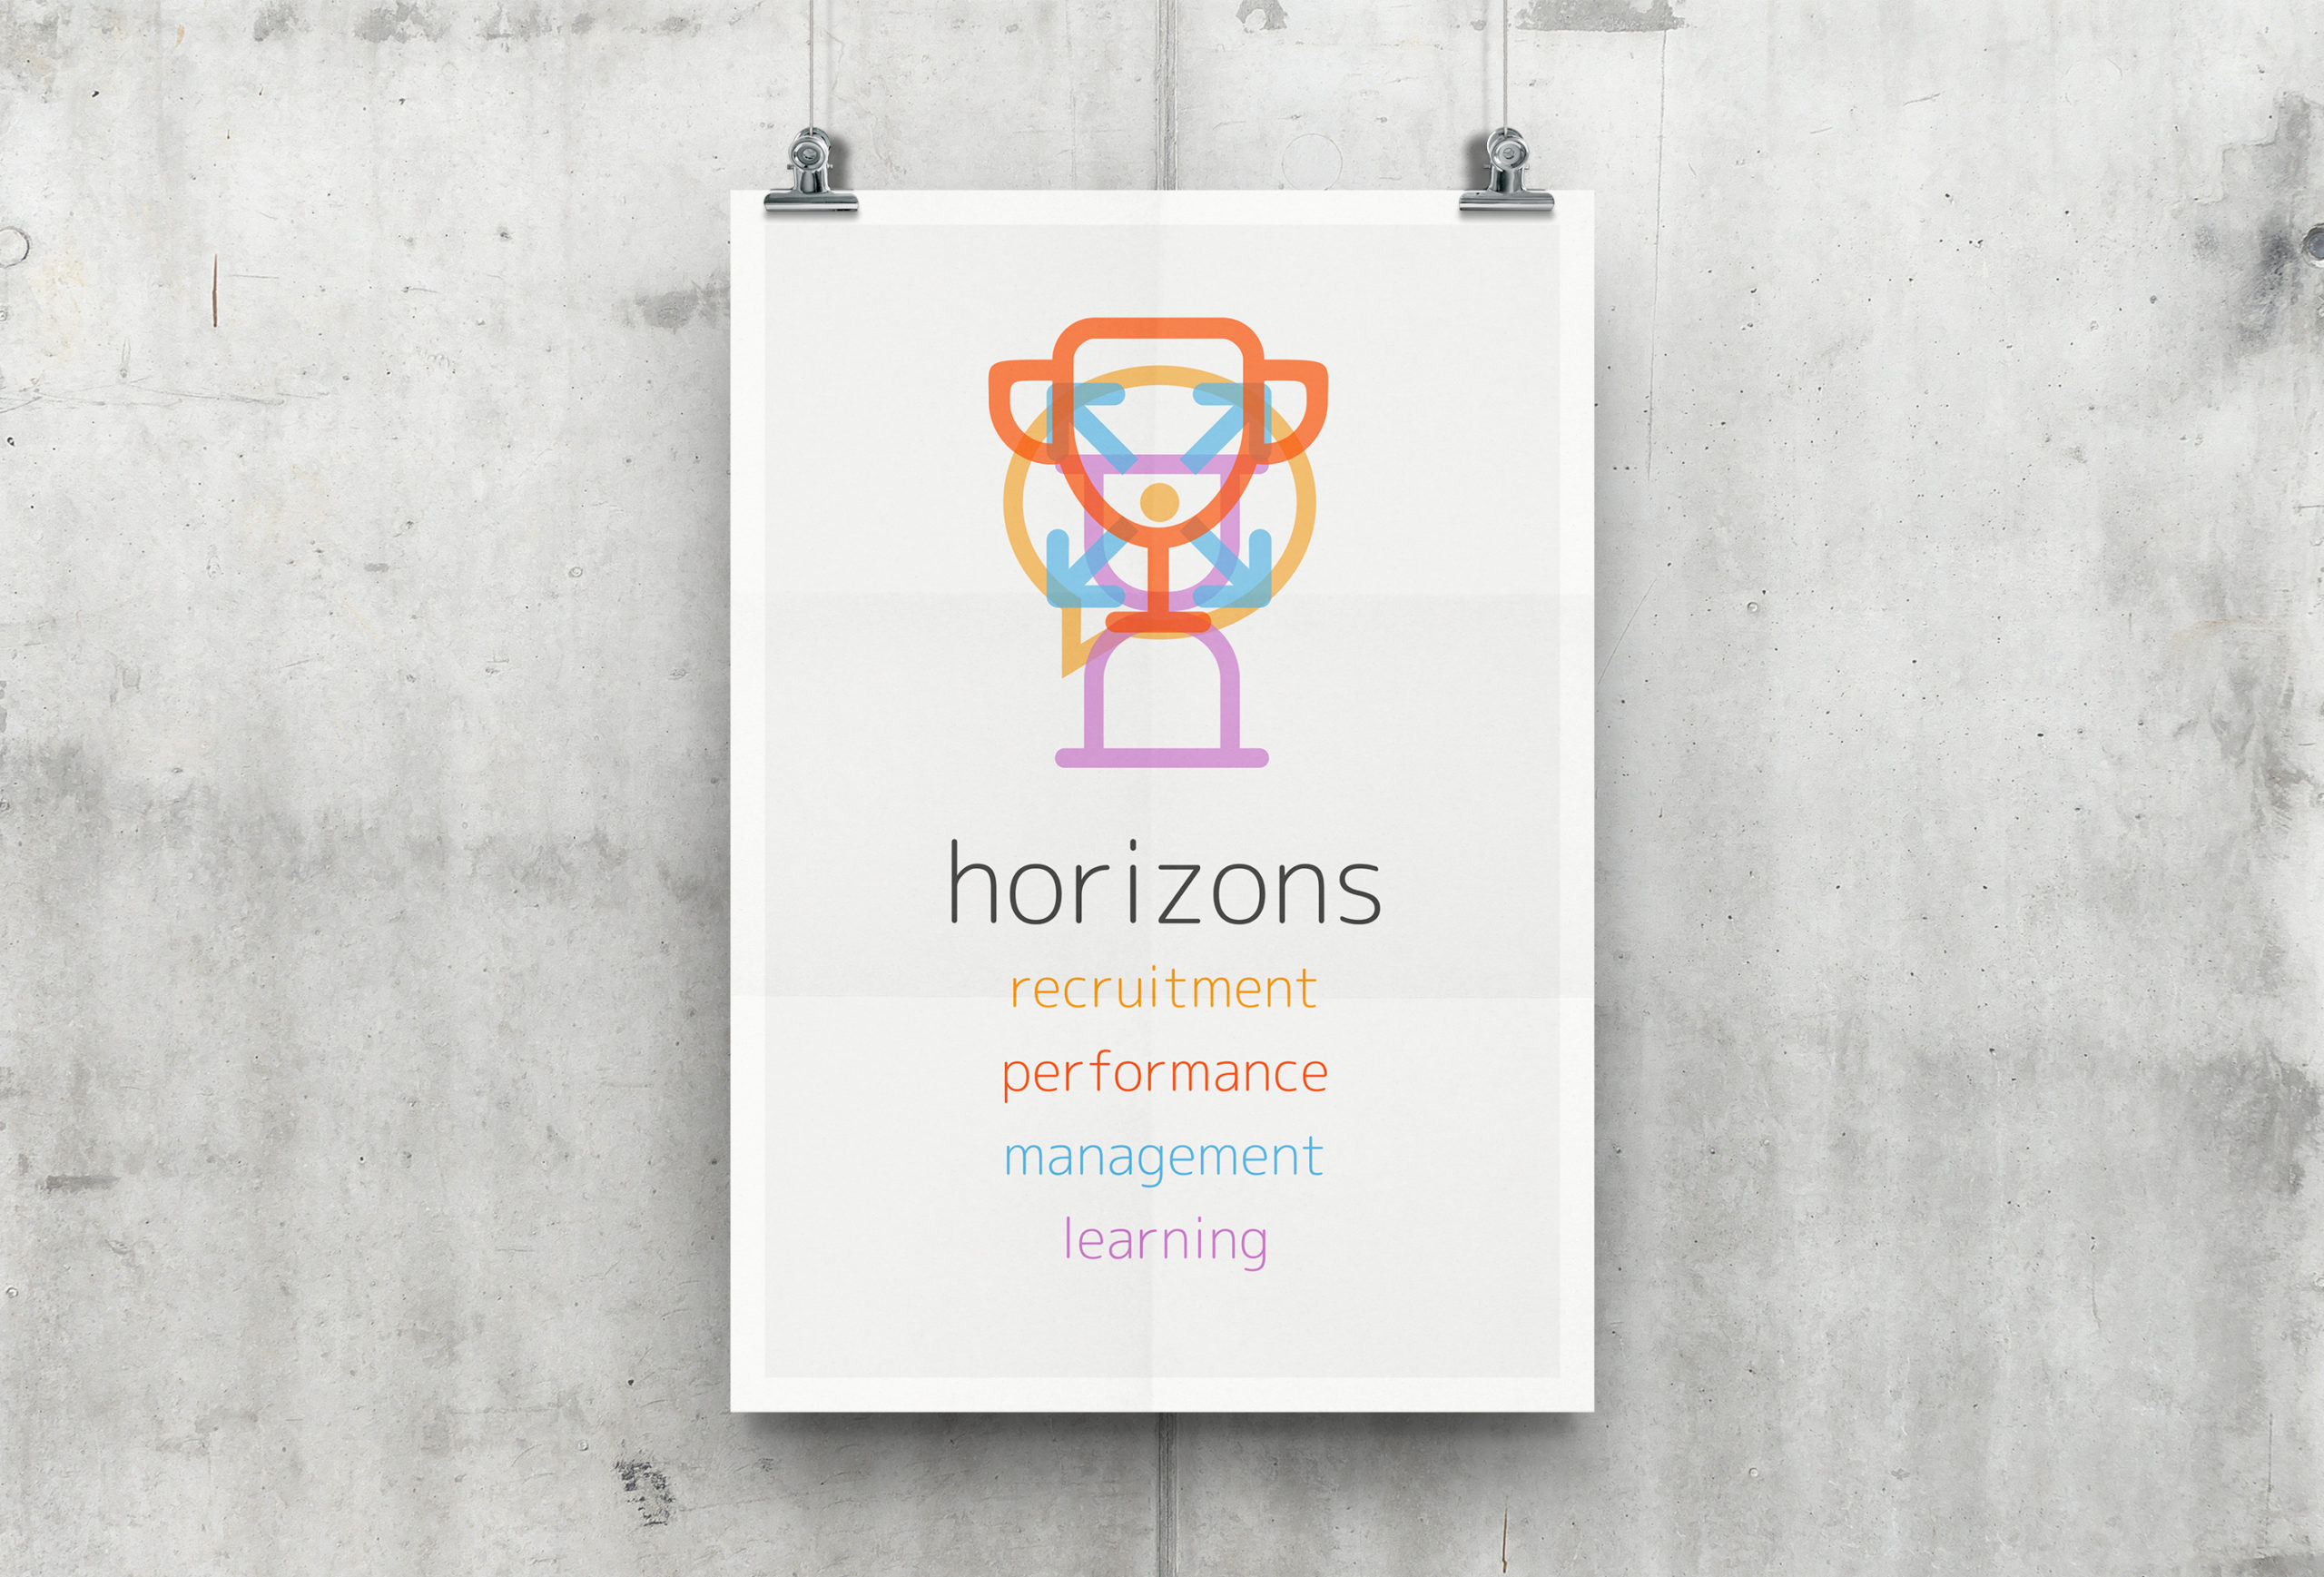 Horizons, recruitment, performance, management en learning